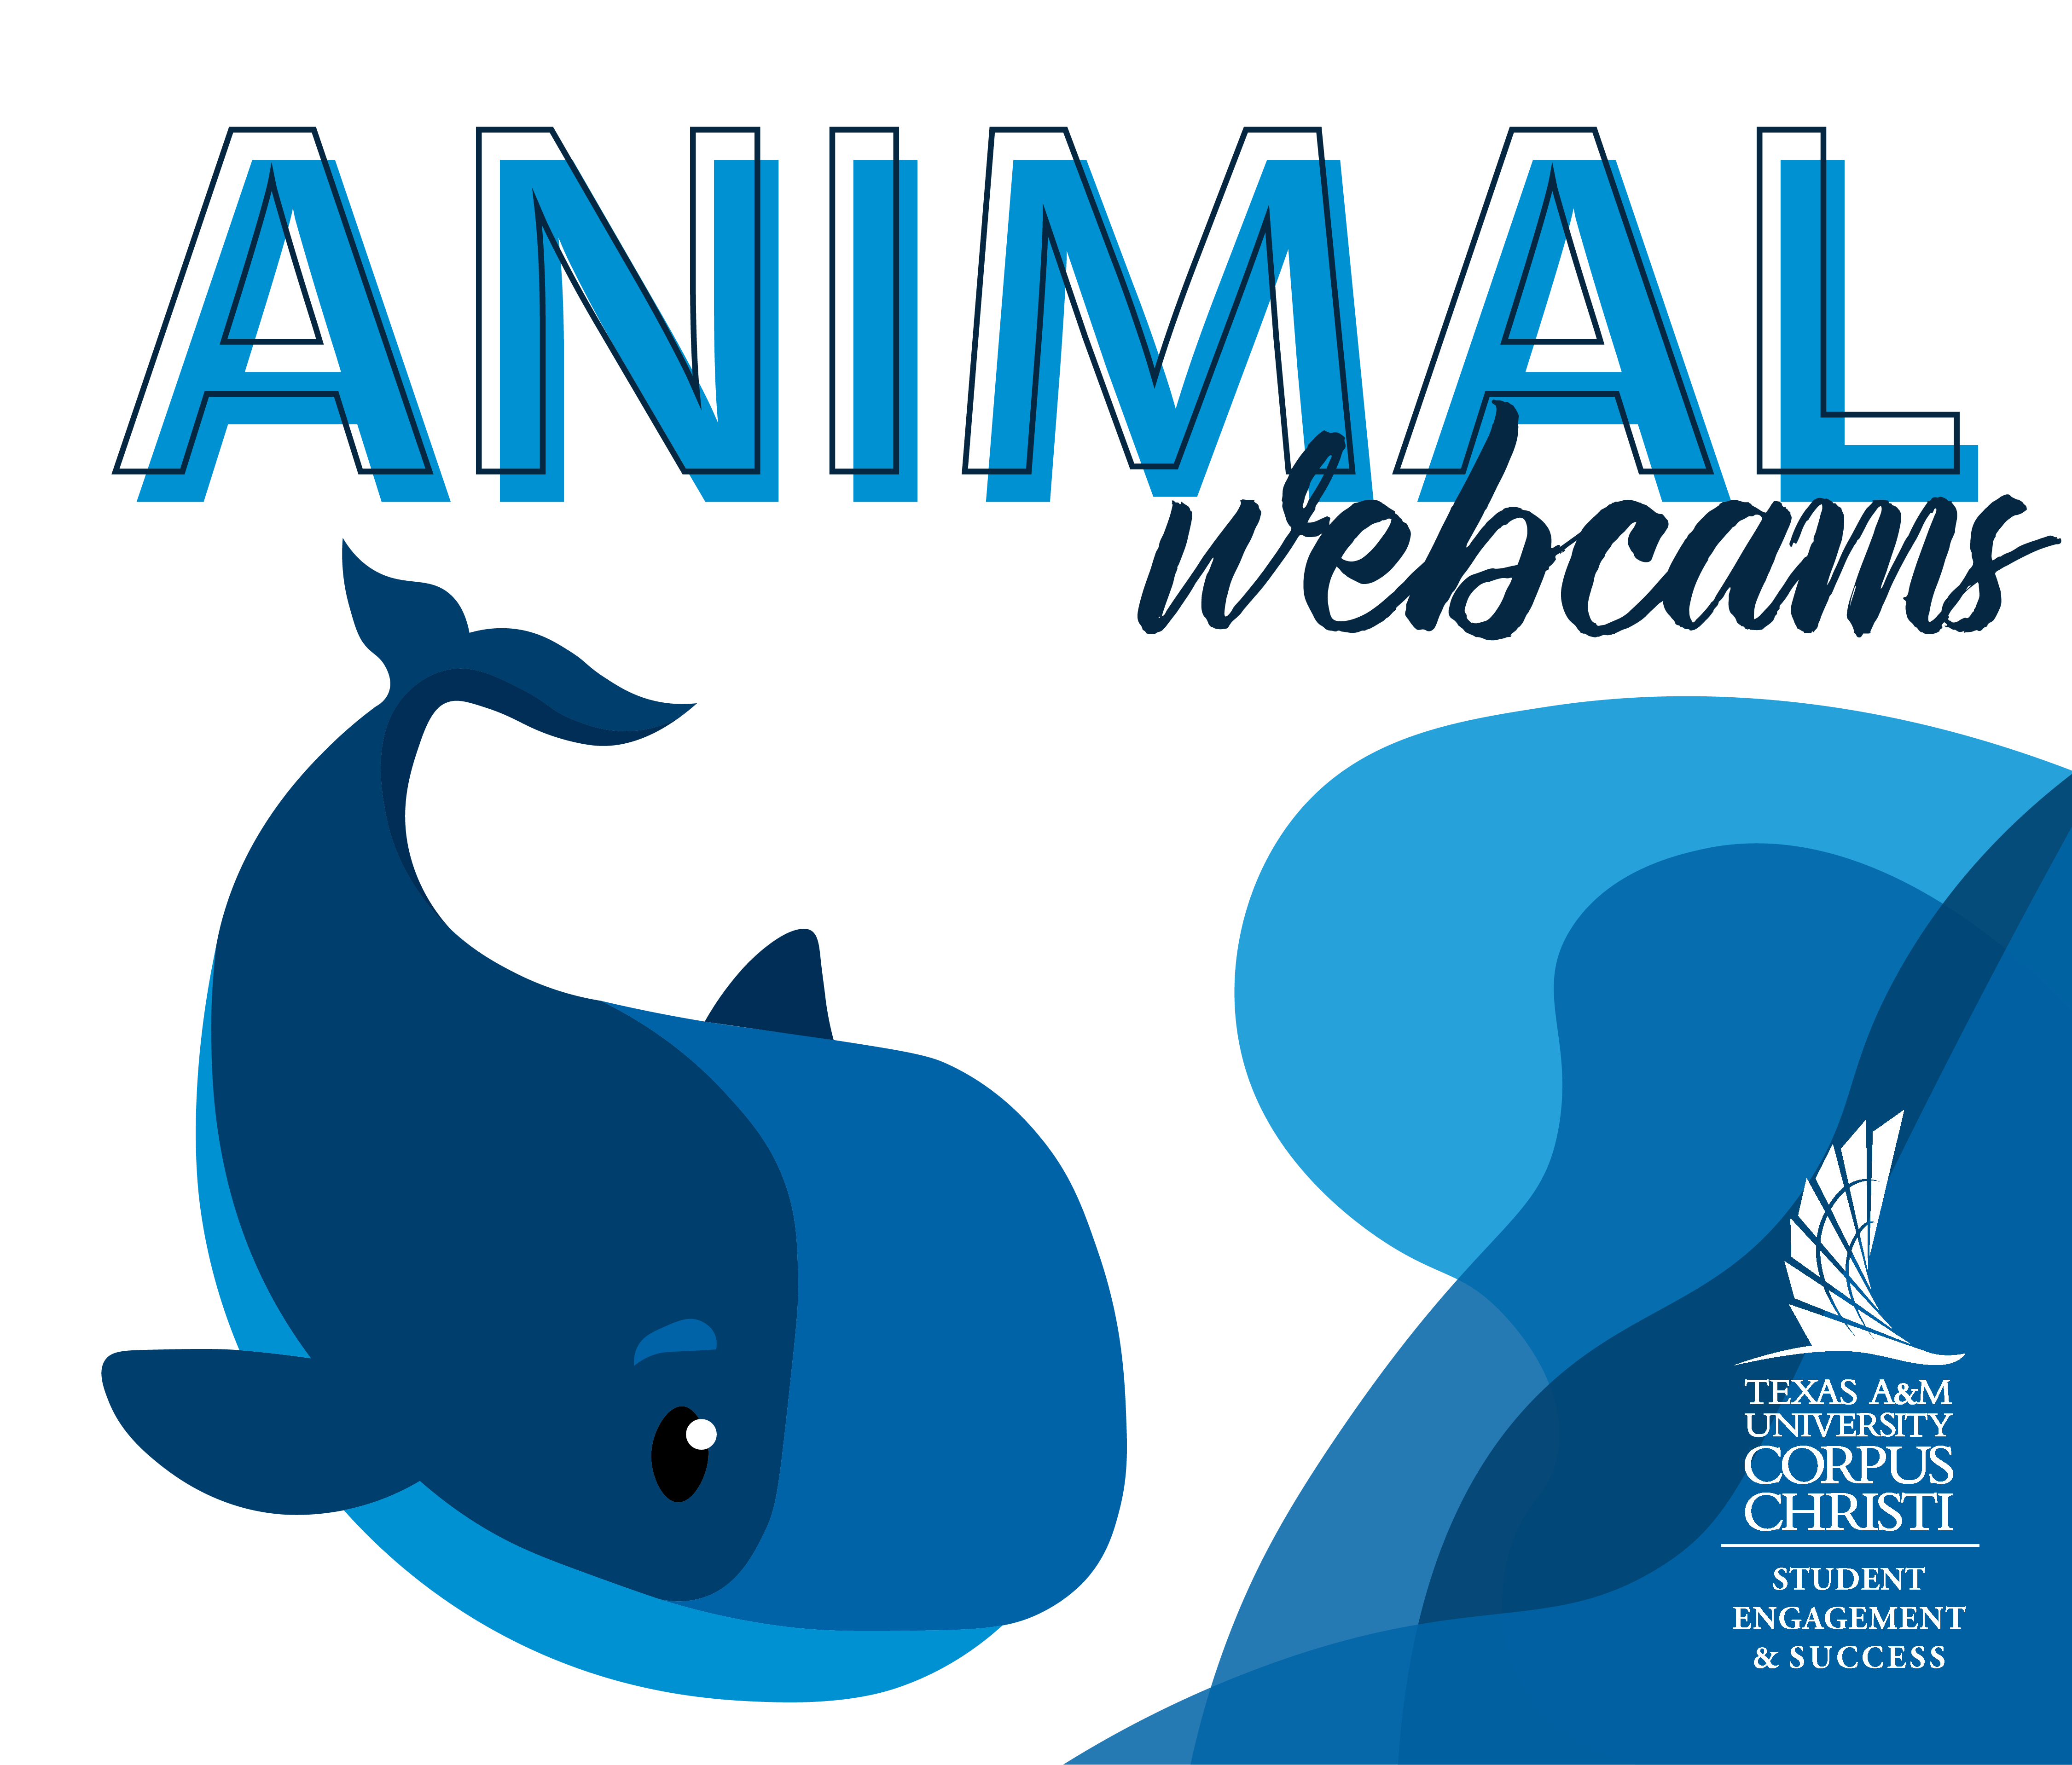 Zoo and aquarium animal webcams